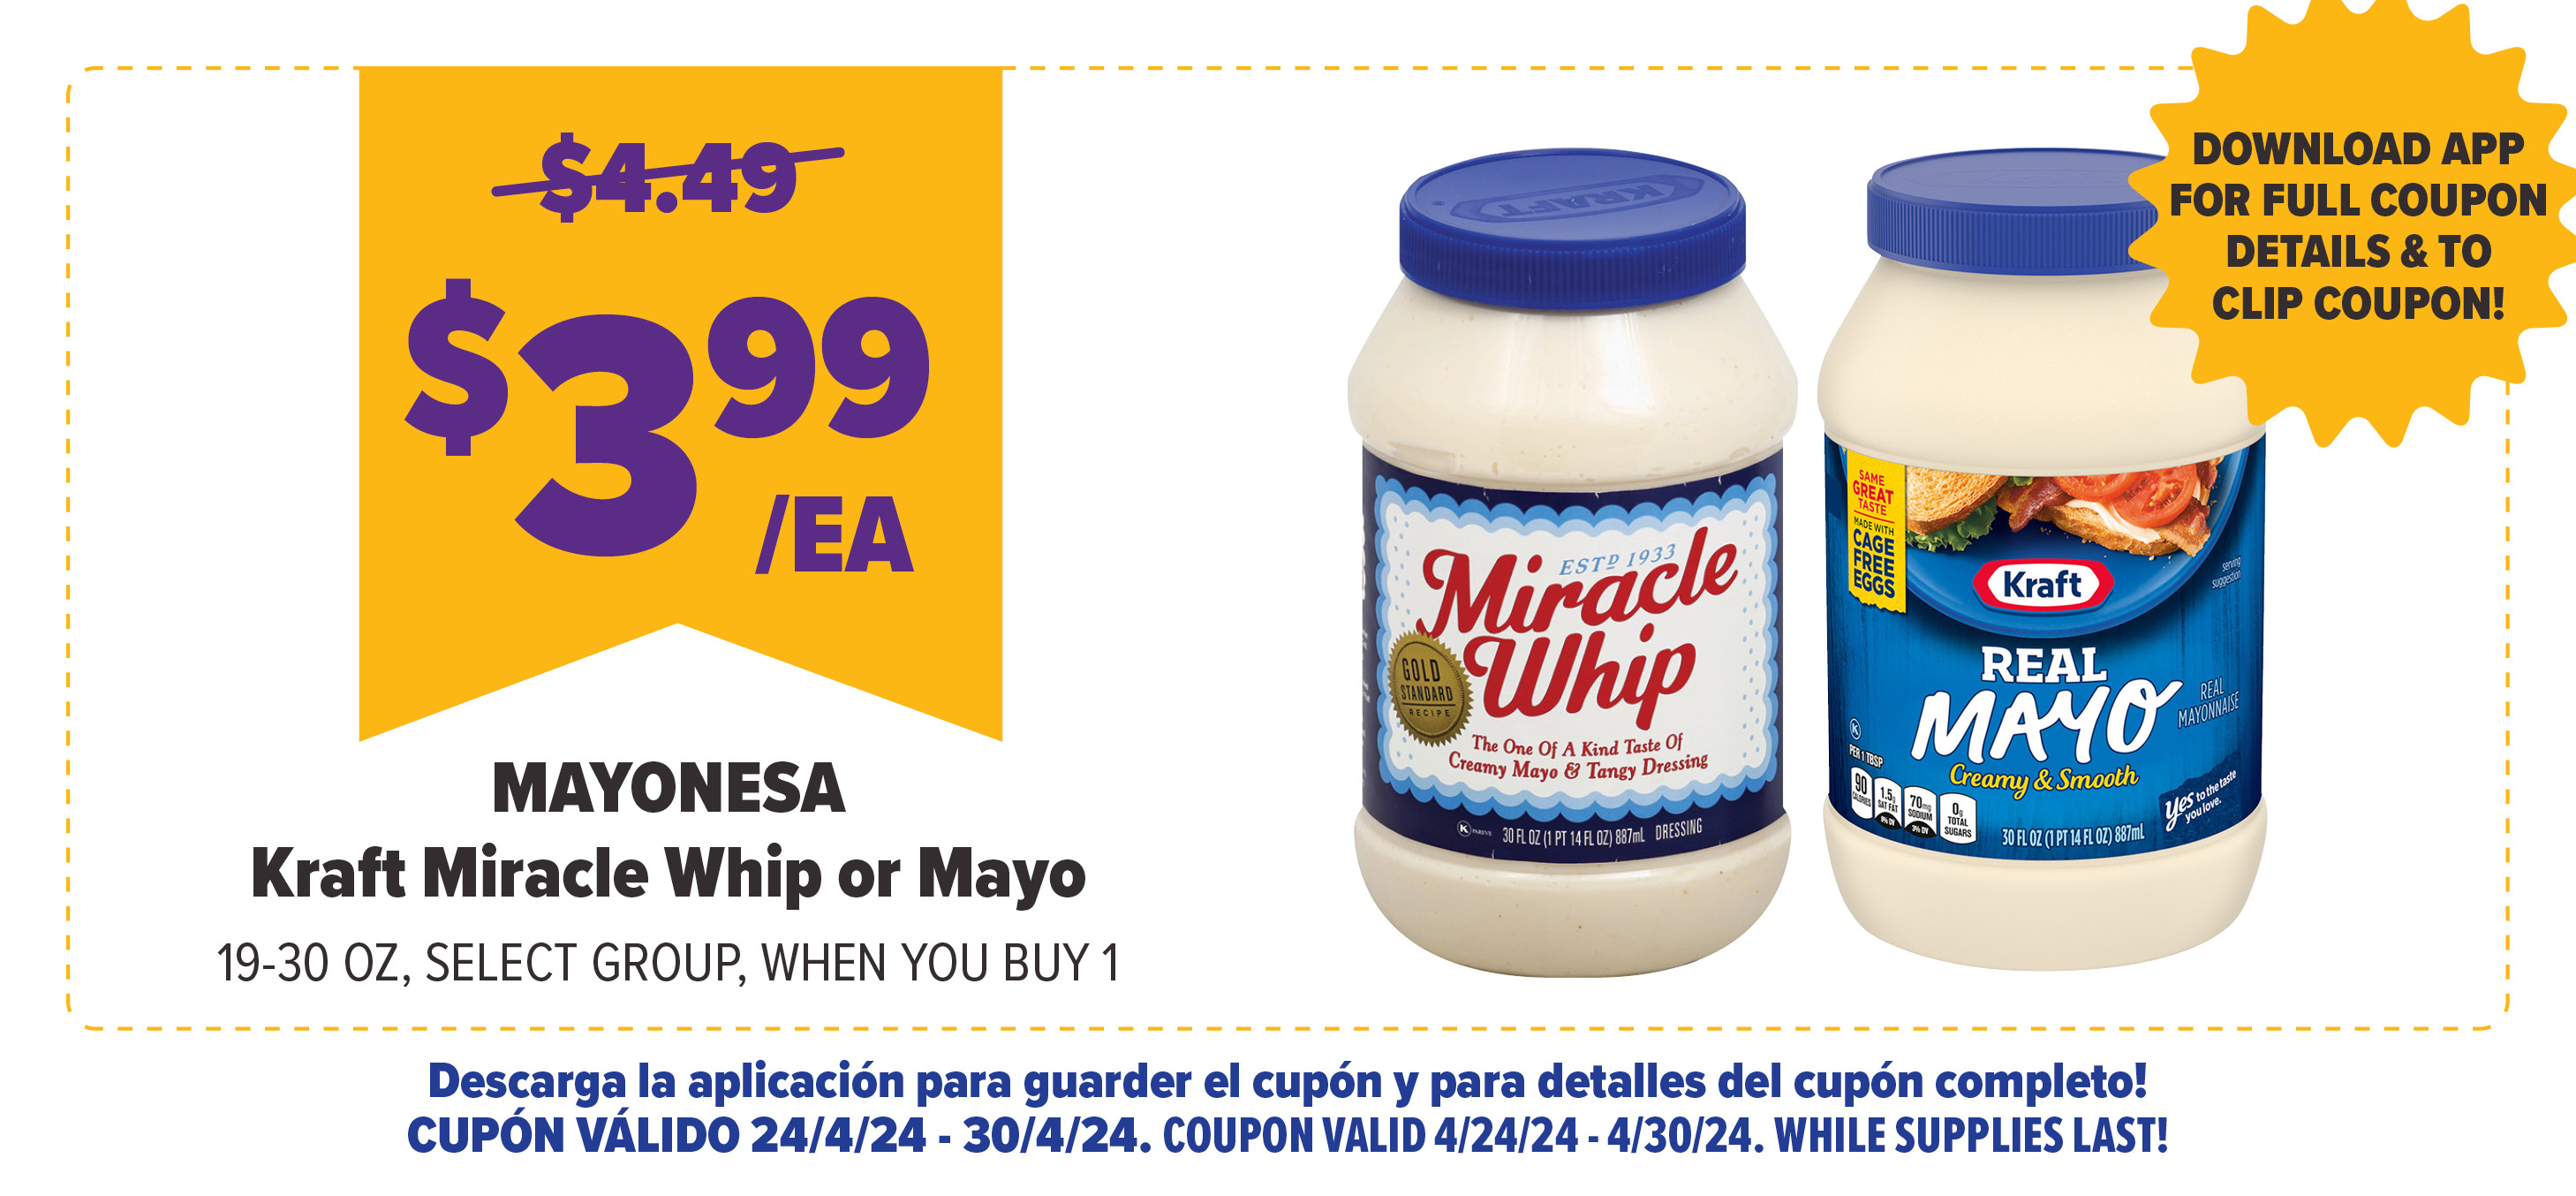 Digital Deal of the Week, Kraft Miracle Whip or Mayo